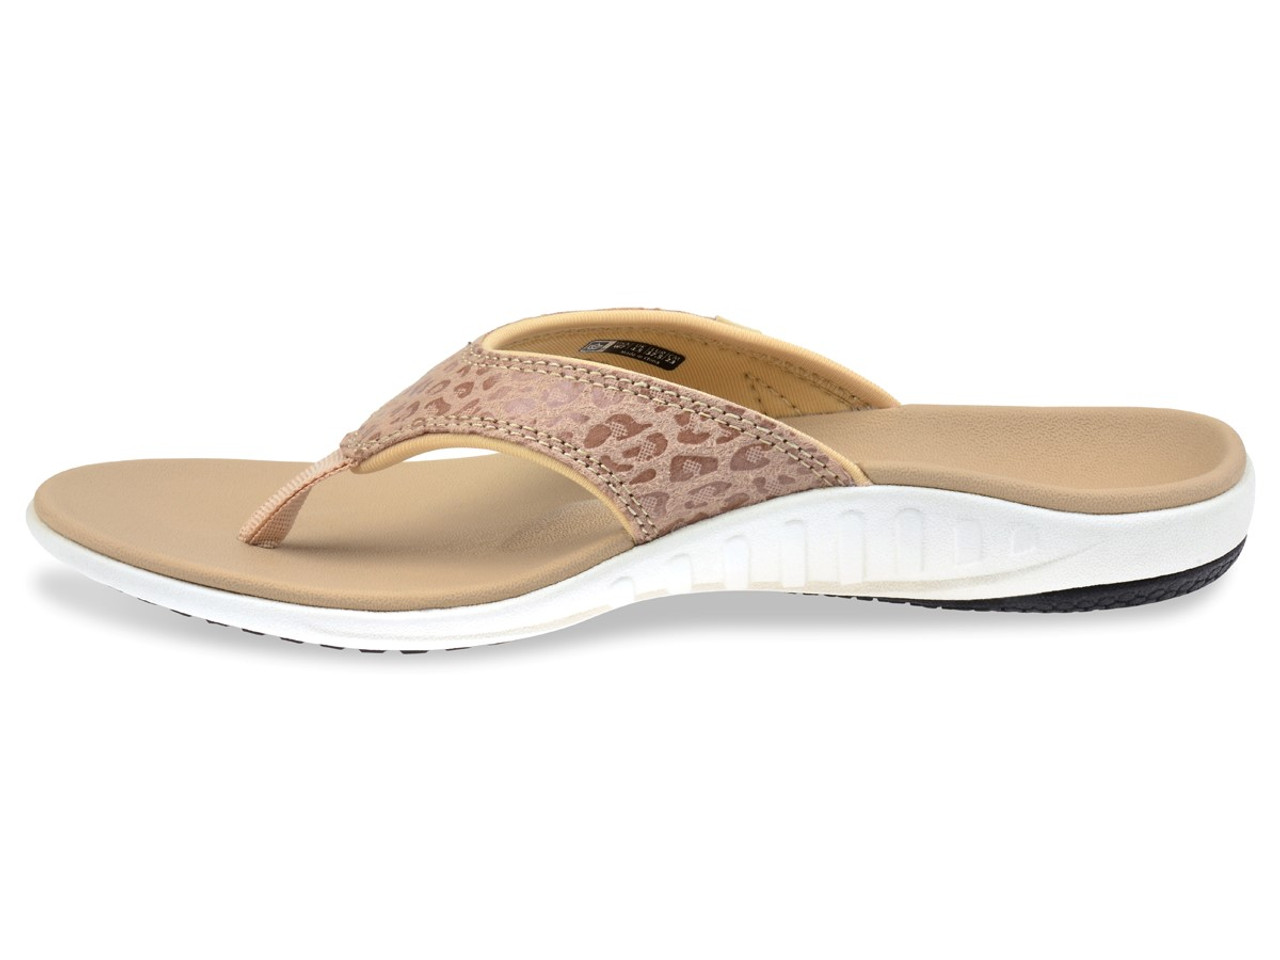 Spenco Cheetah Print Sandals - Women's - Free Shipping